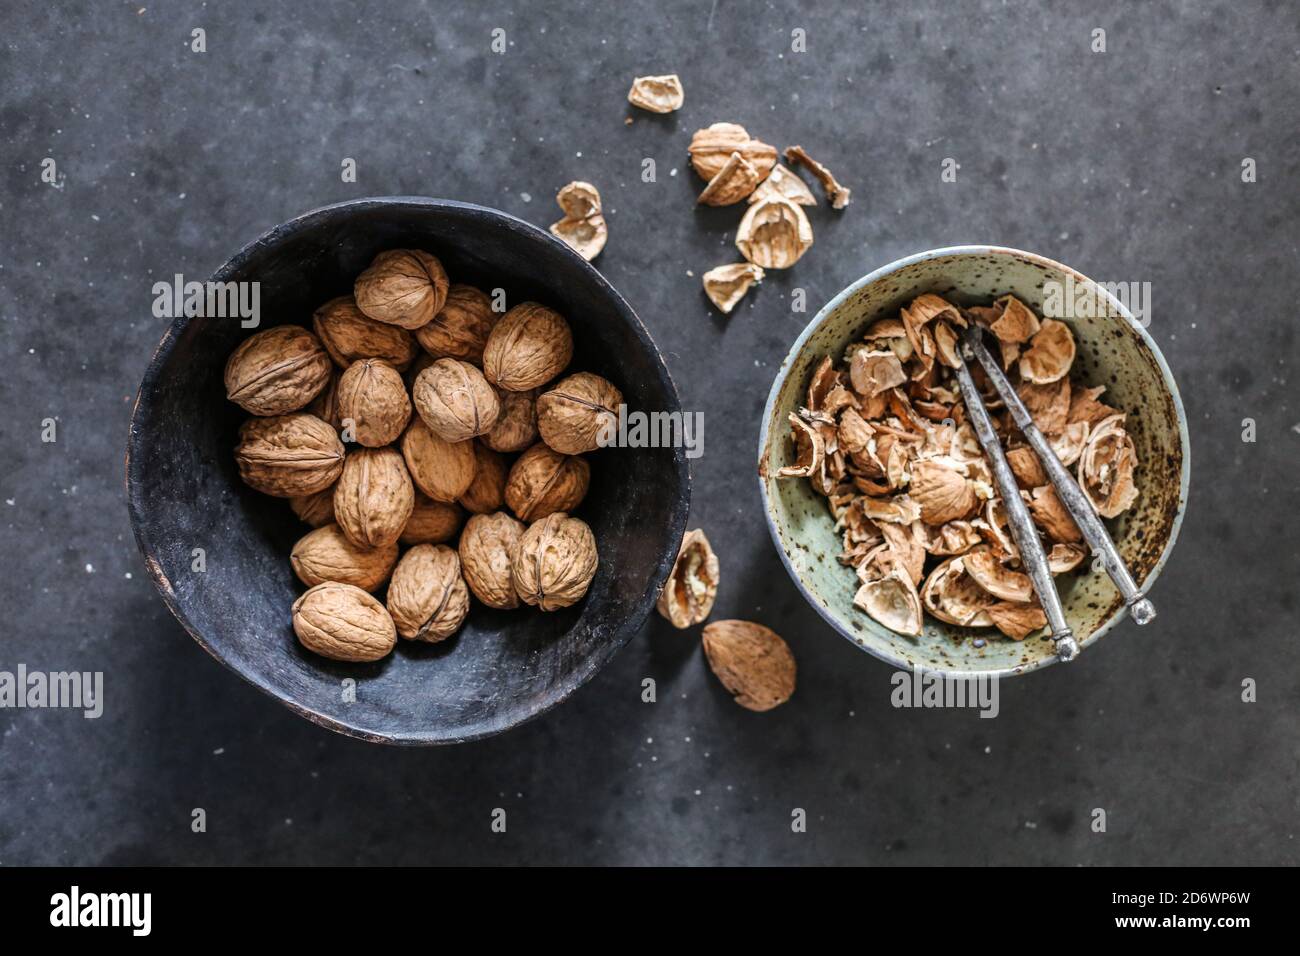 Walnuts. Stock Photo